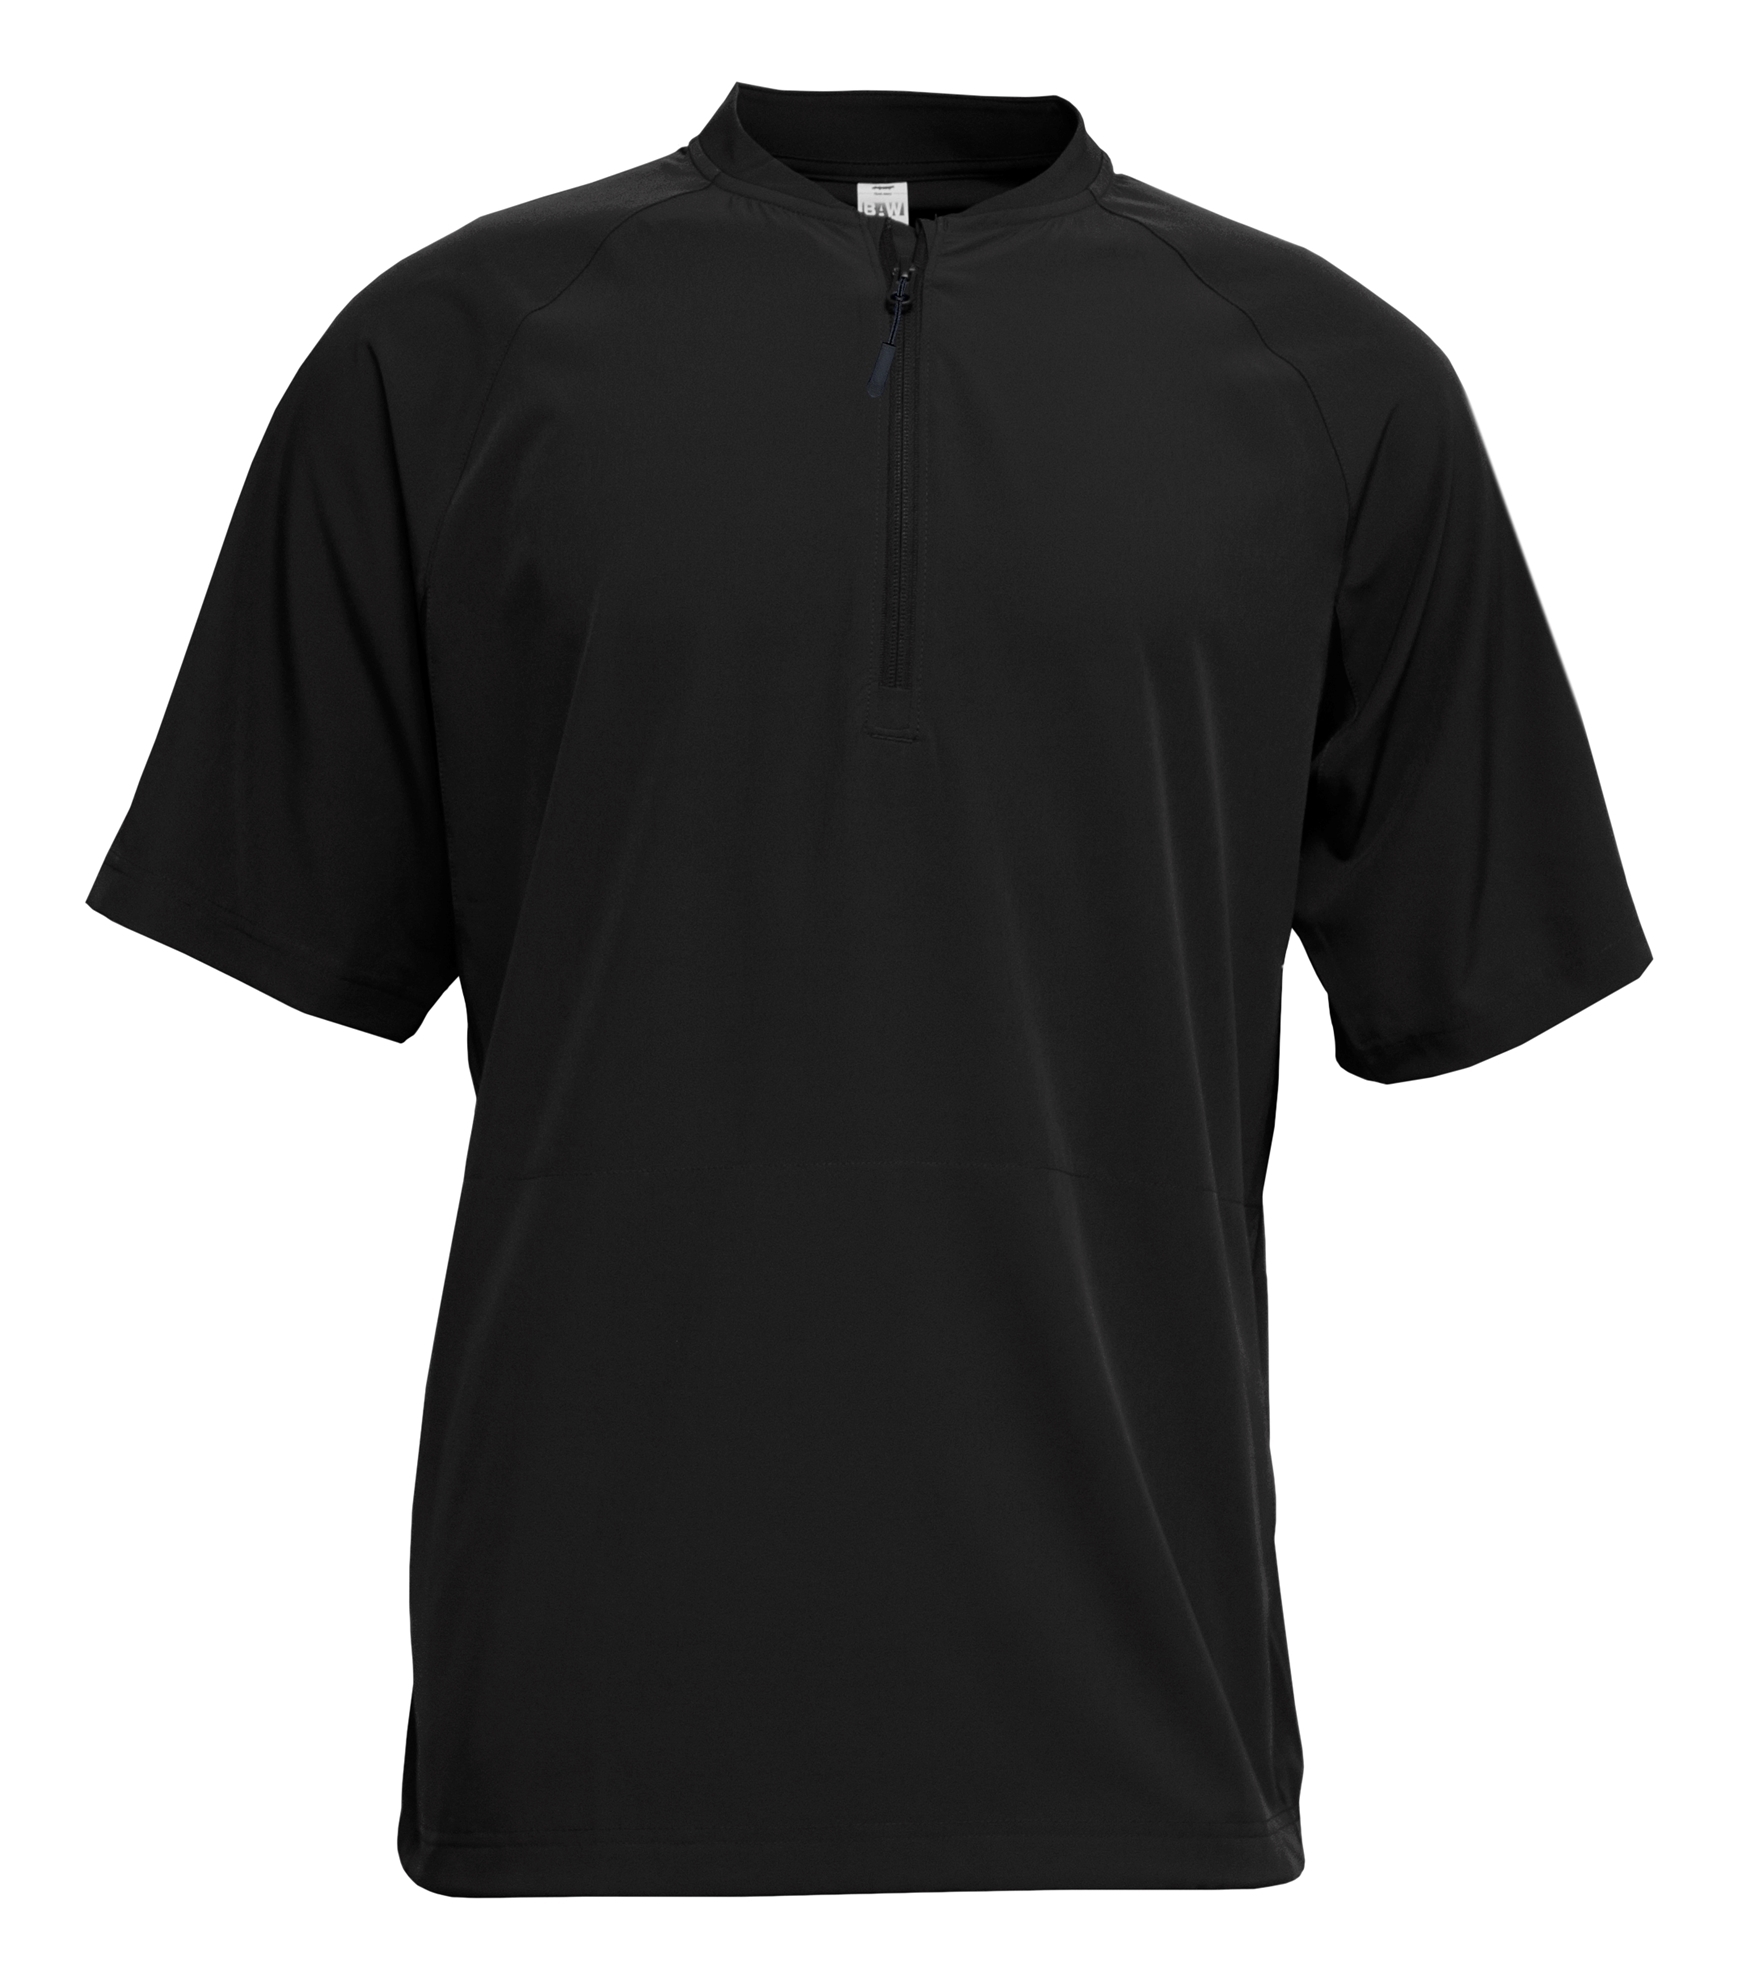 BAW Athletic Wear CJ136 - Adult Over Shirt